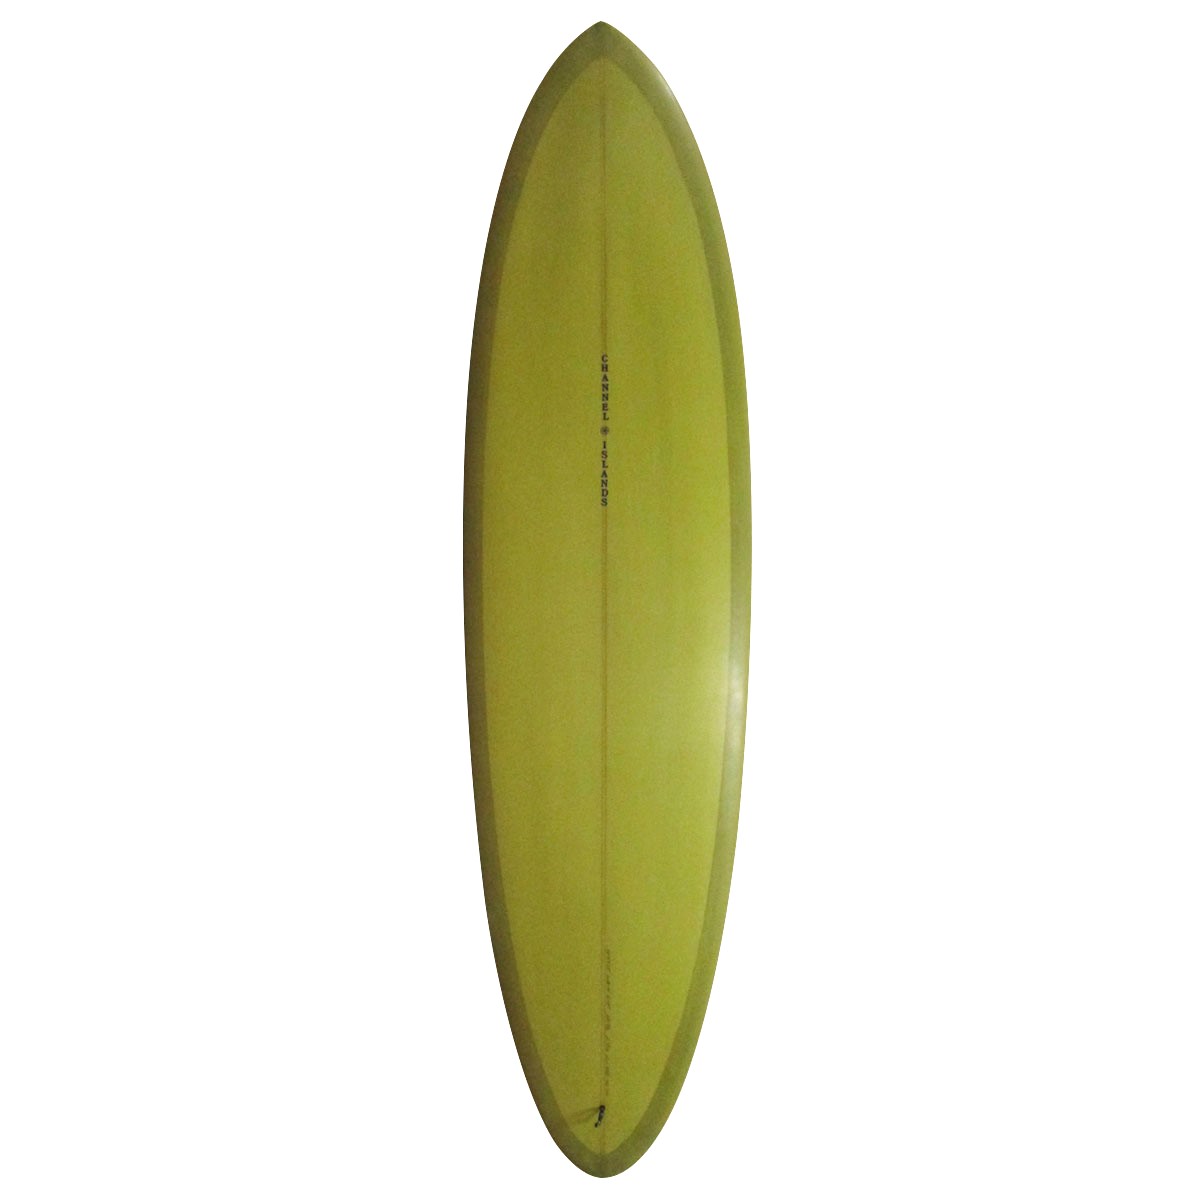 FUN BOARD | サーフボードギャラリー | USED SURF×SURF MARKET